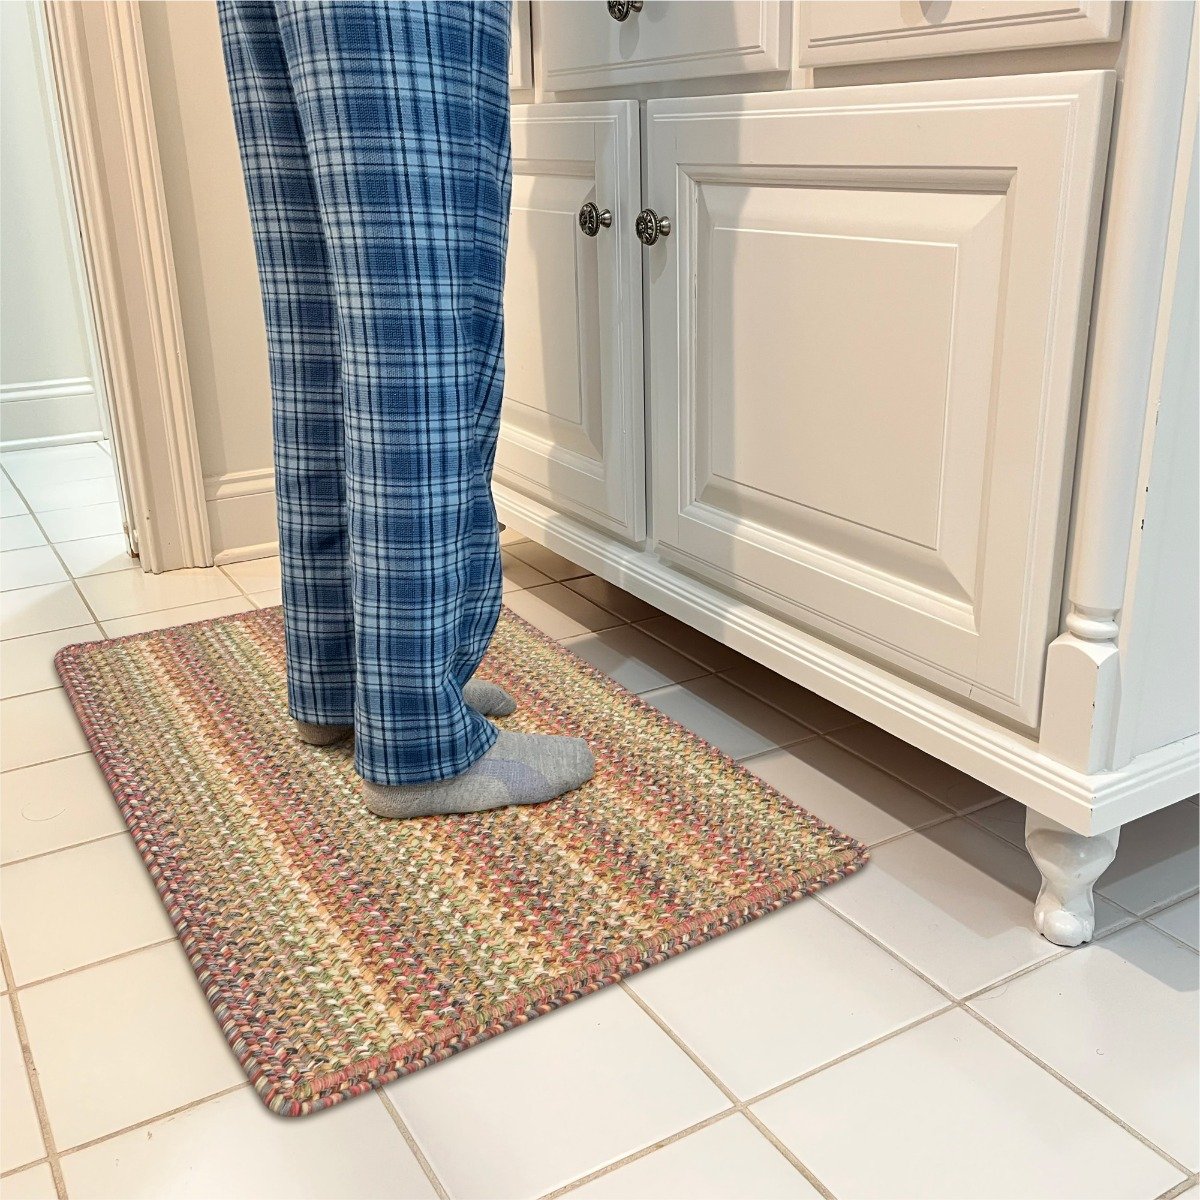 Waterproof Non-slip Plush Floor Carpet Bathroom Mat - Soft And